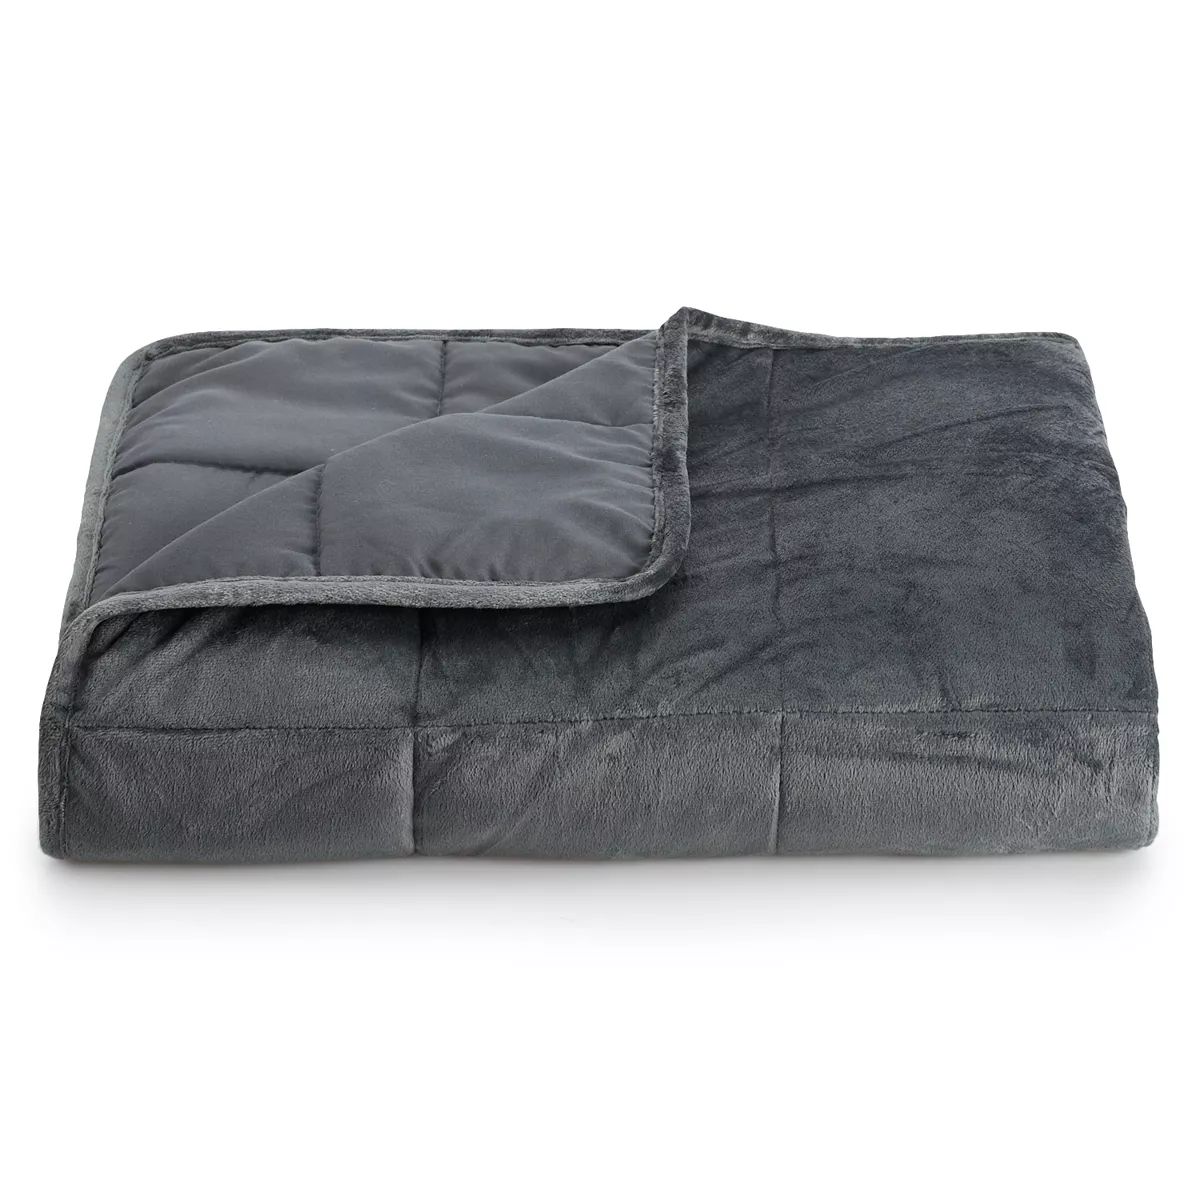 Altavida 12-lb. Ultra Plush Faux Mink Weighted Blanket | Kohl's